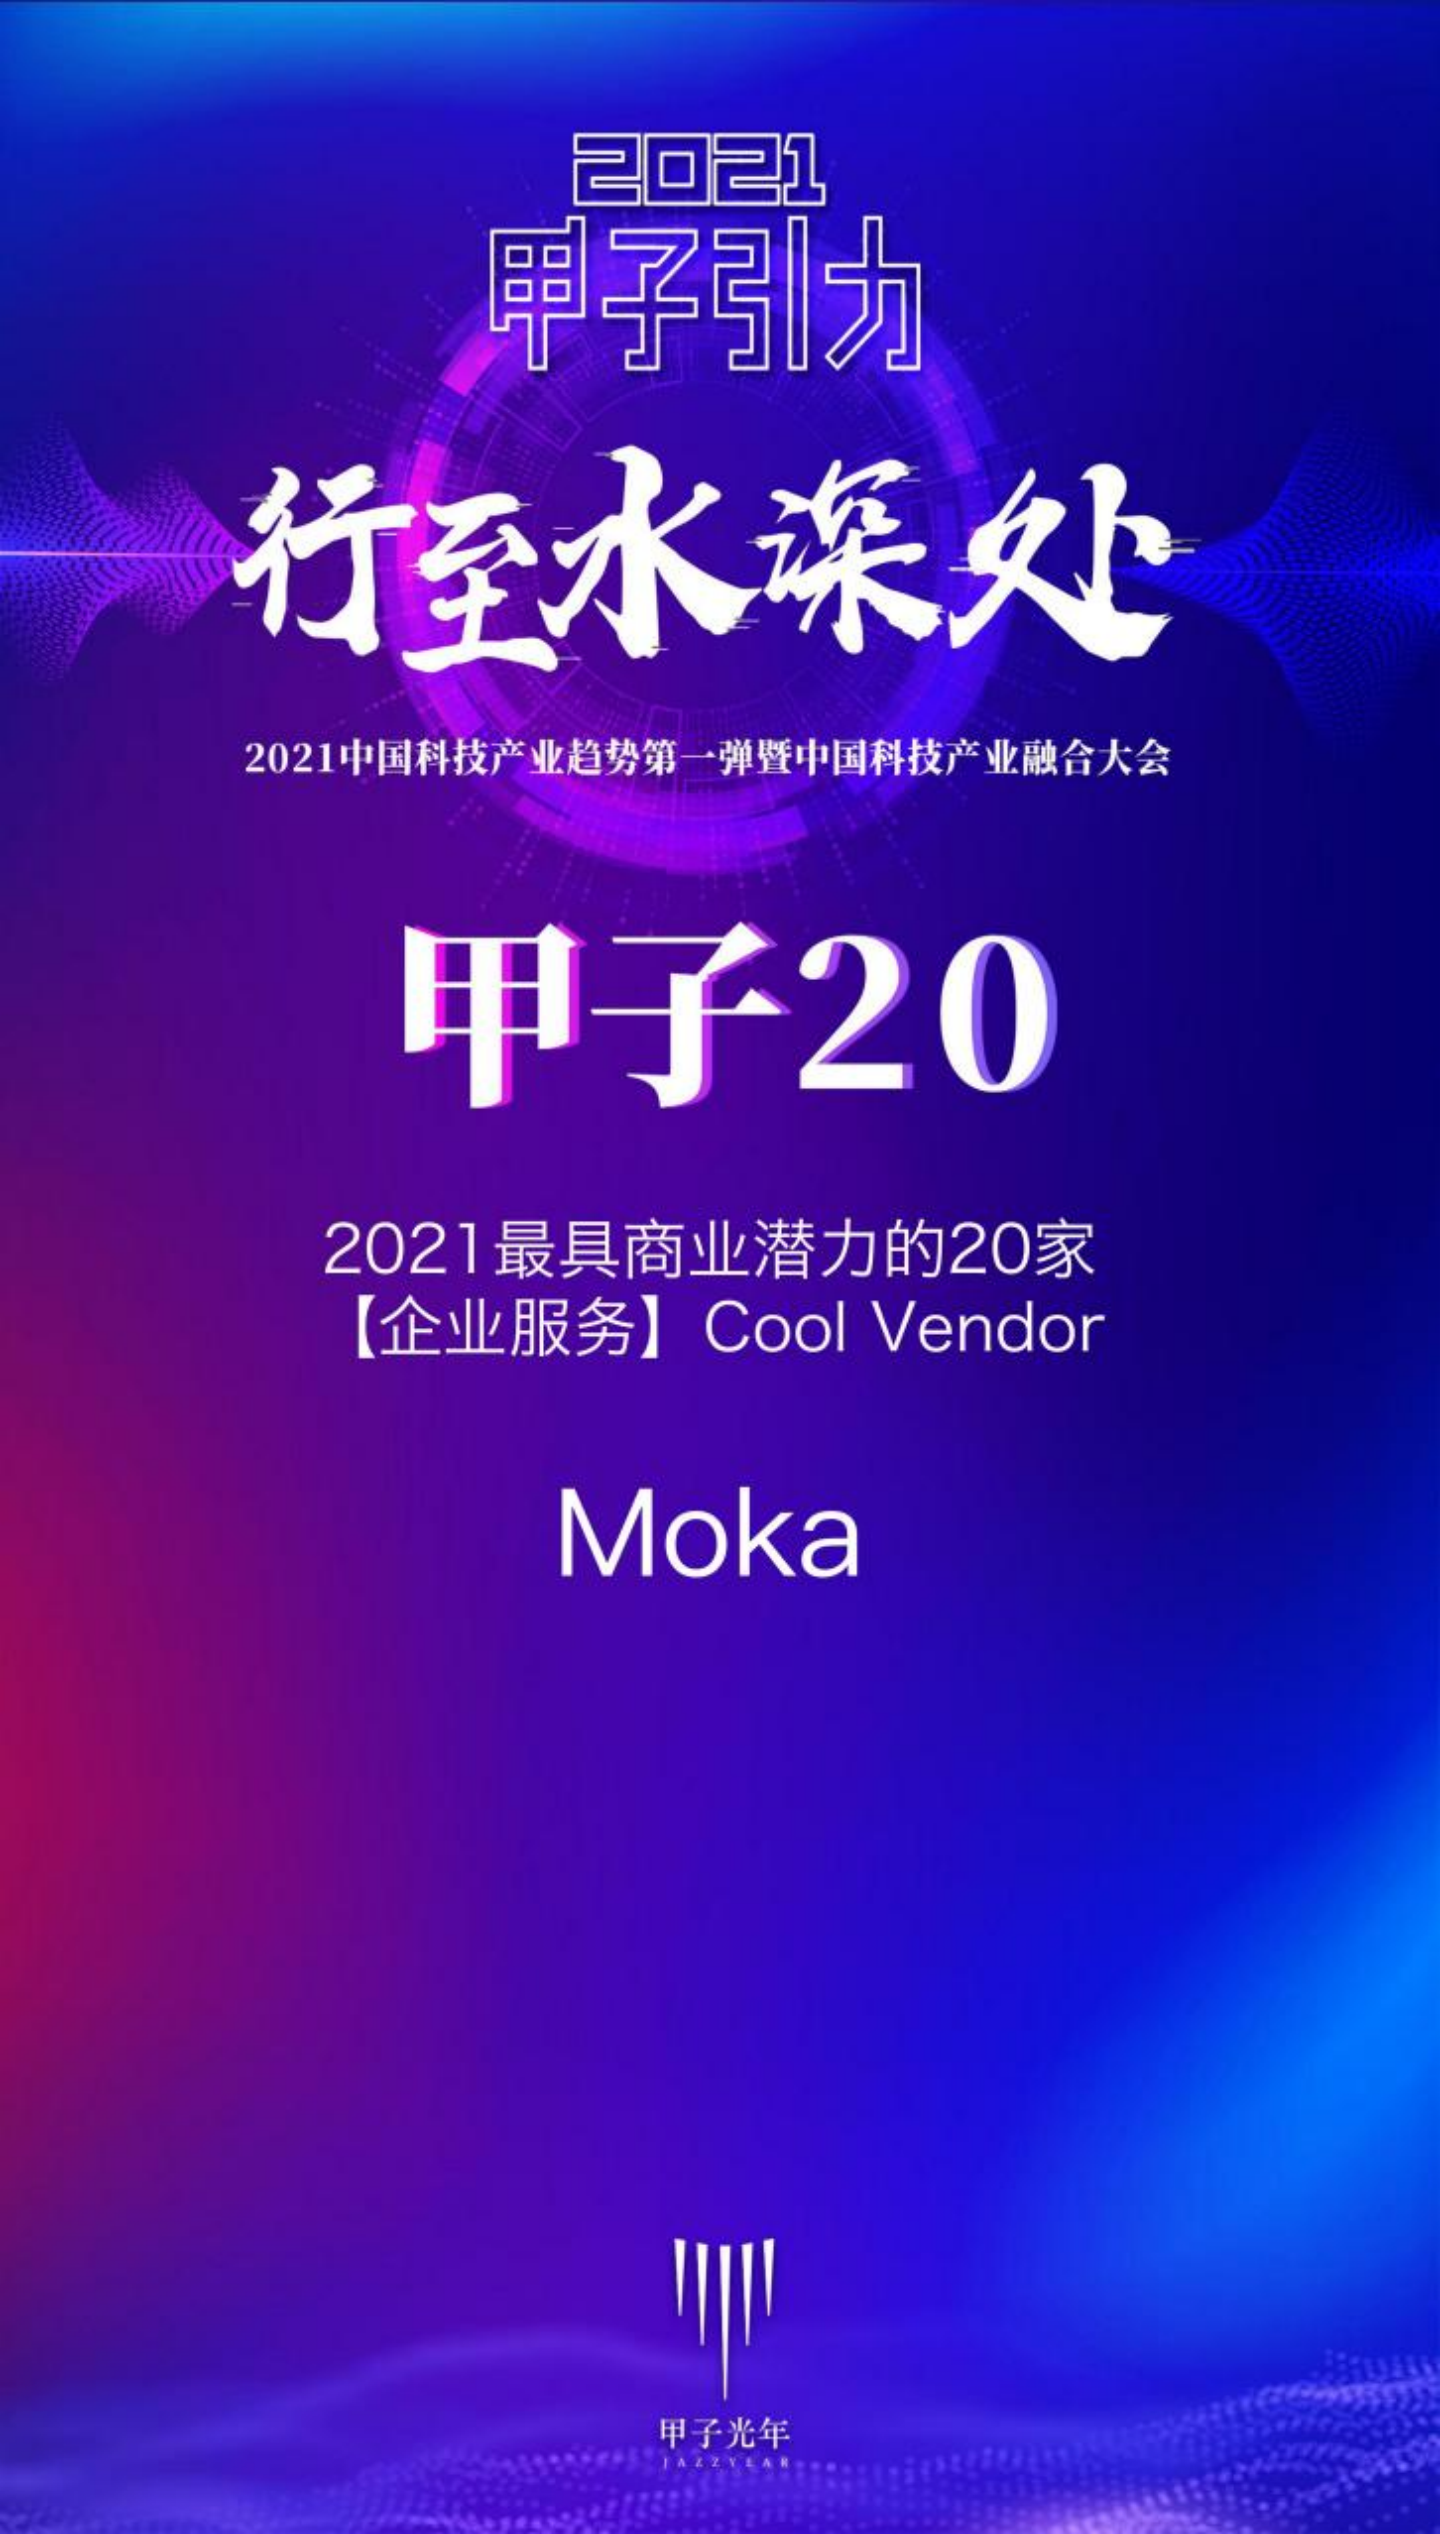 Moka入选甲子光年“2021最具商业潜力的科技企业榜单”-Moka智能化招聘系统